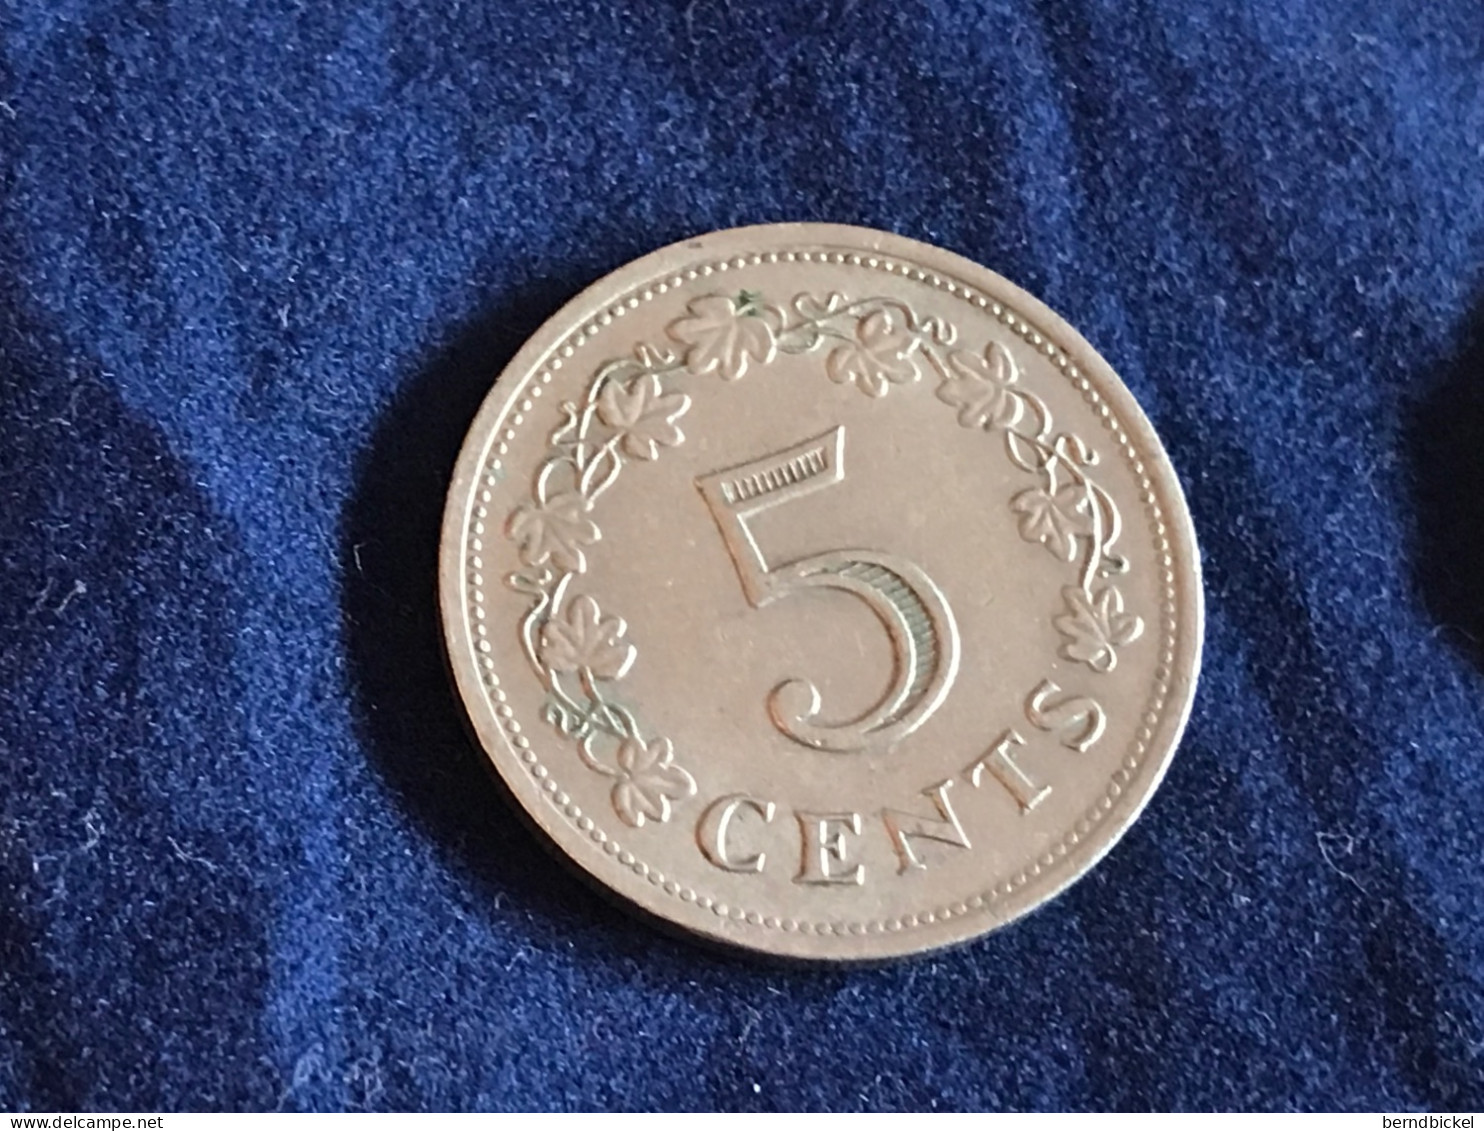 Münze Münzen Umlaufmünze Malta 5 Cents 1976 - Malta